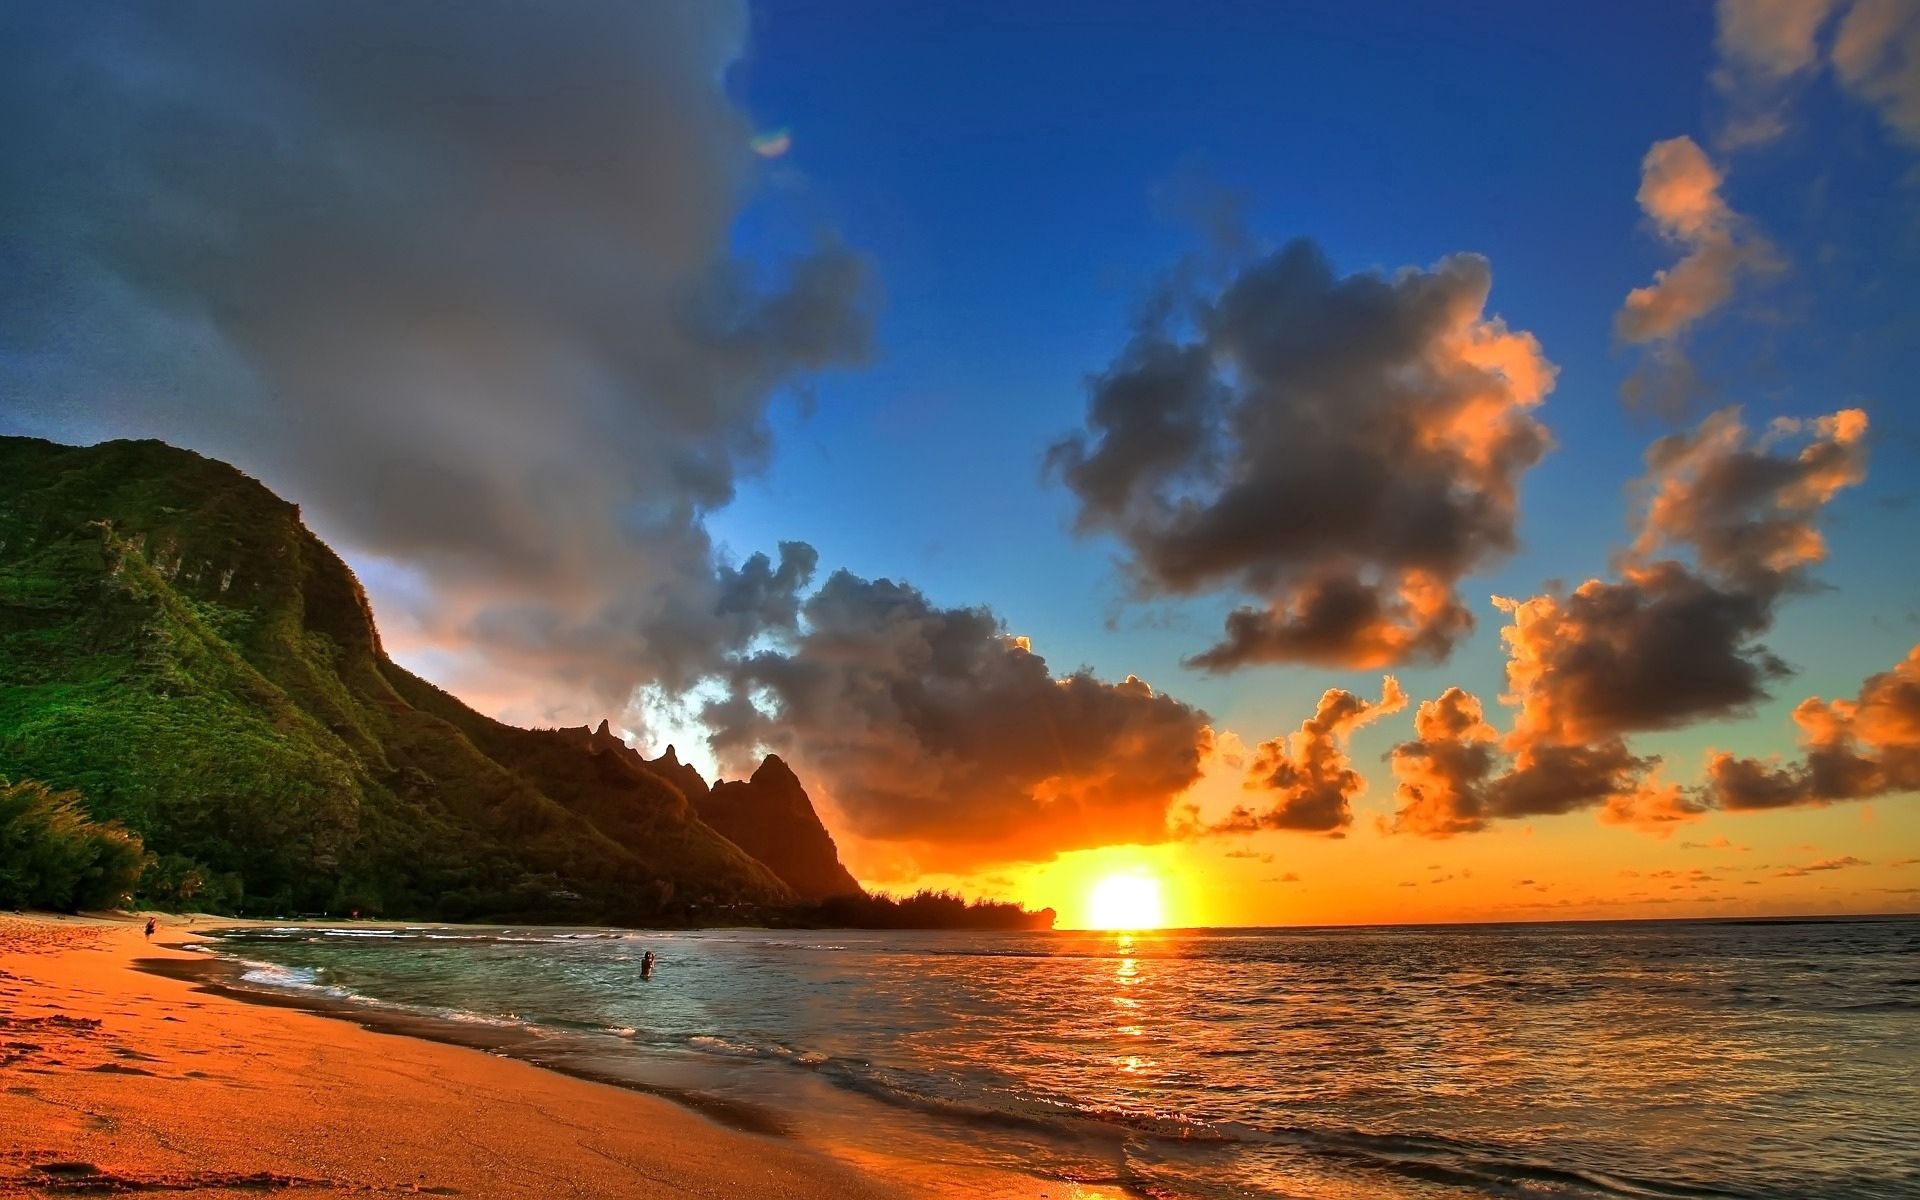 sun, shore, sunset, beach, clouds, nature, evening, mountains, sea, bank, calm High Definition image